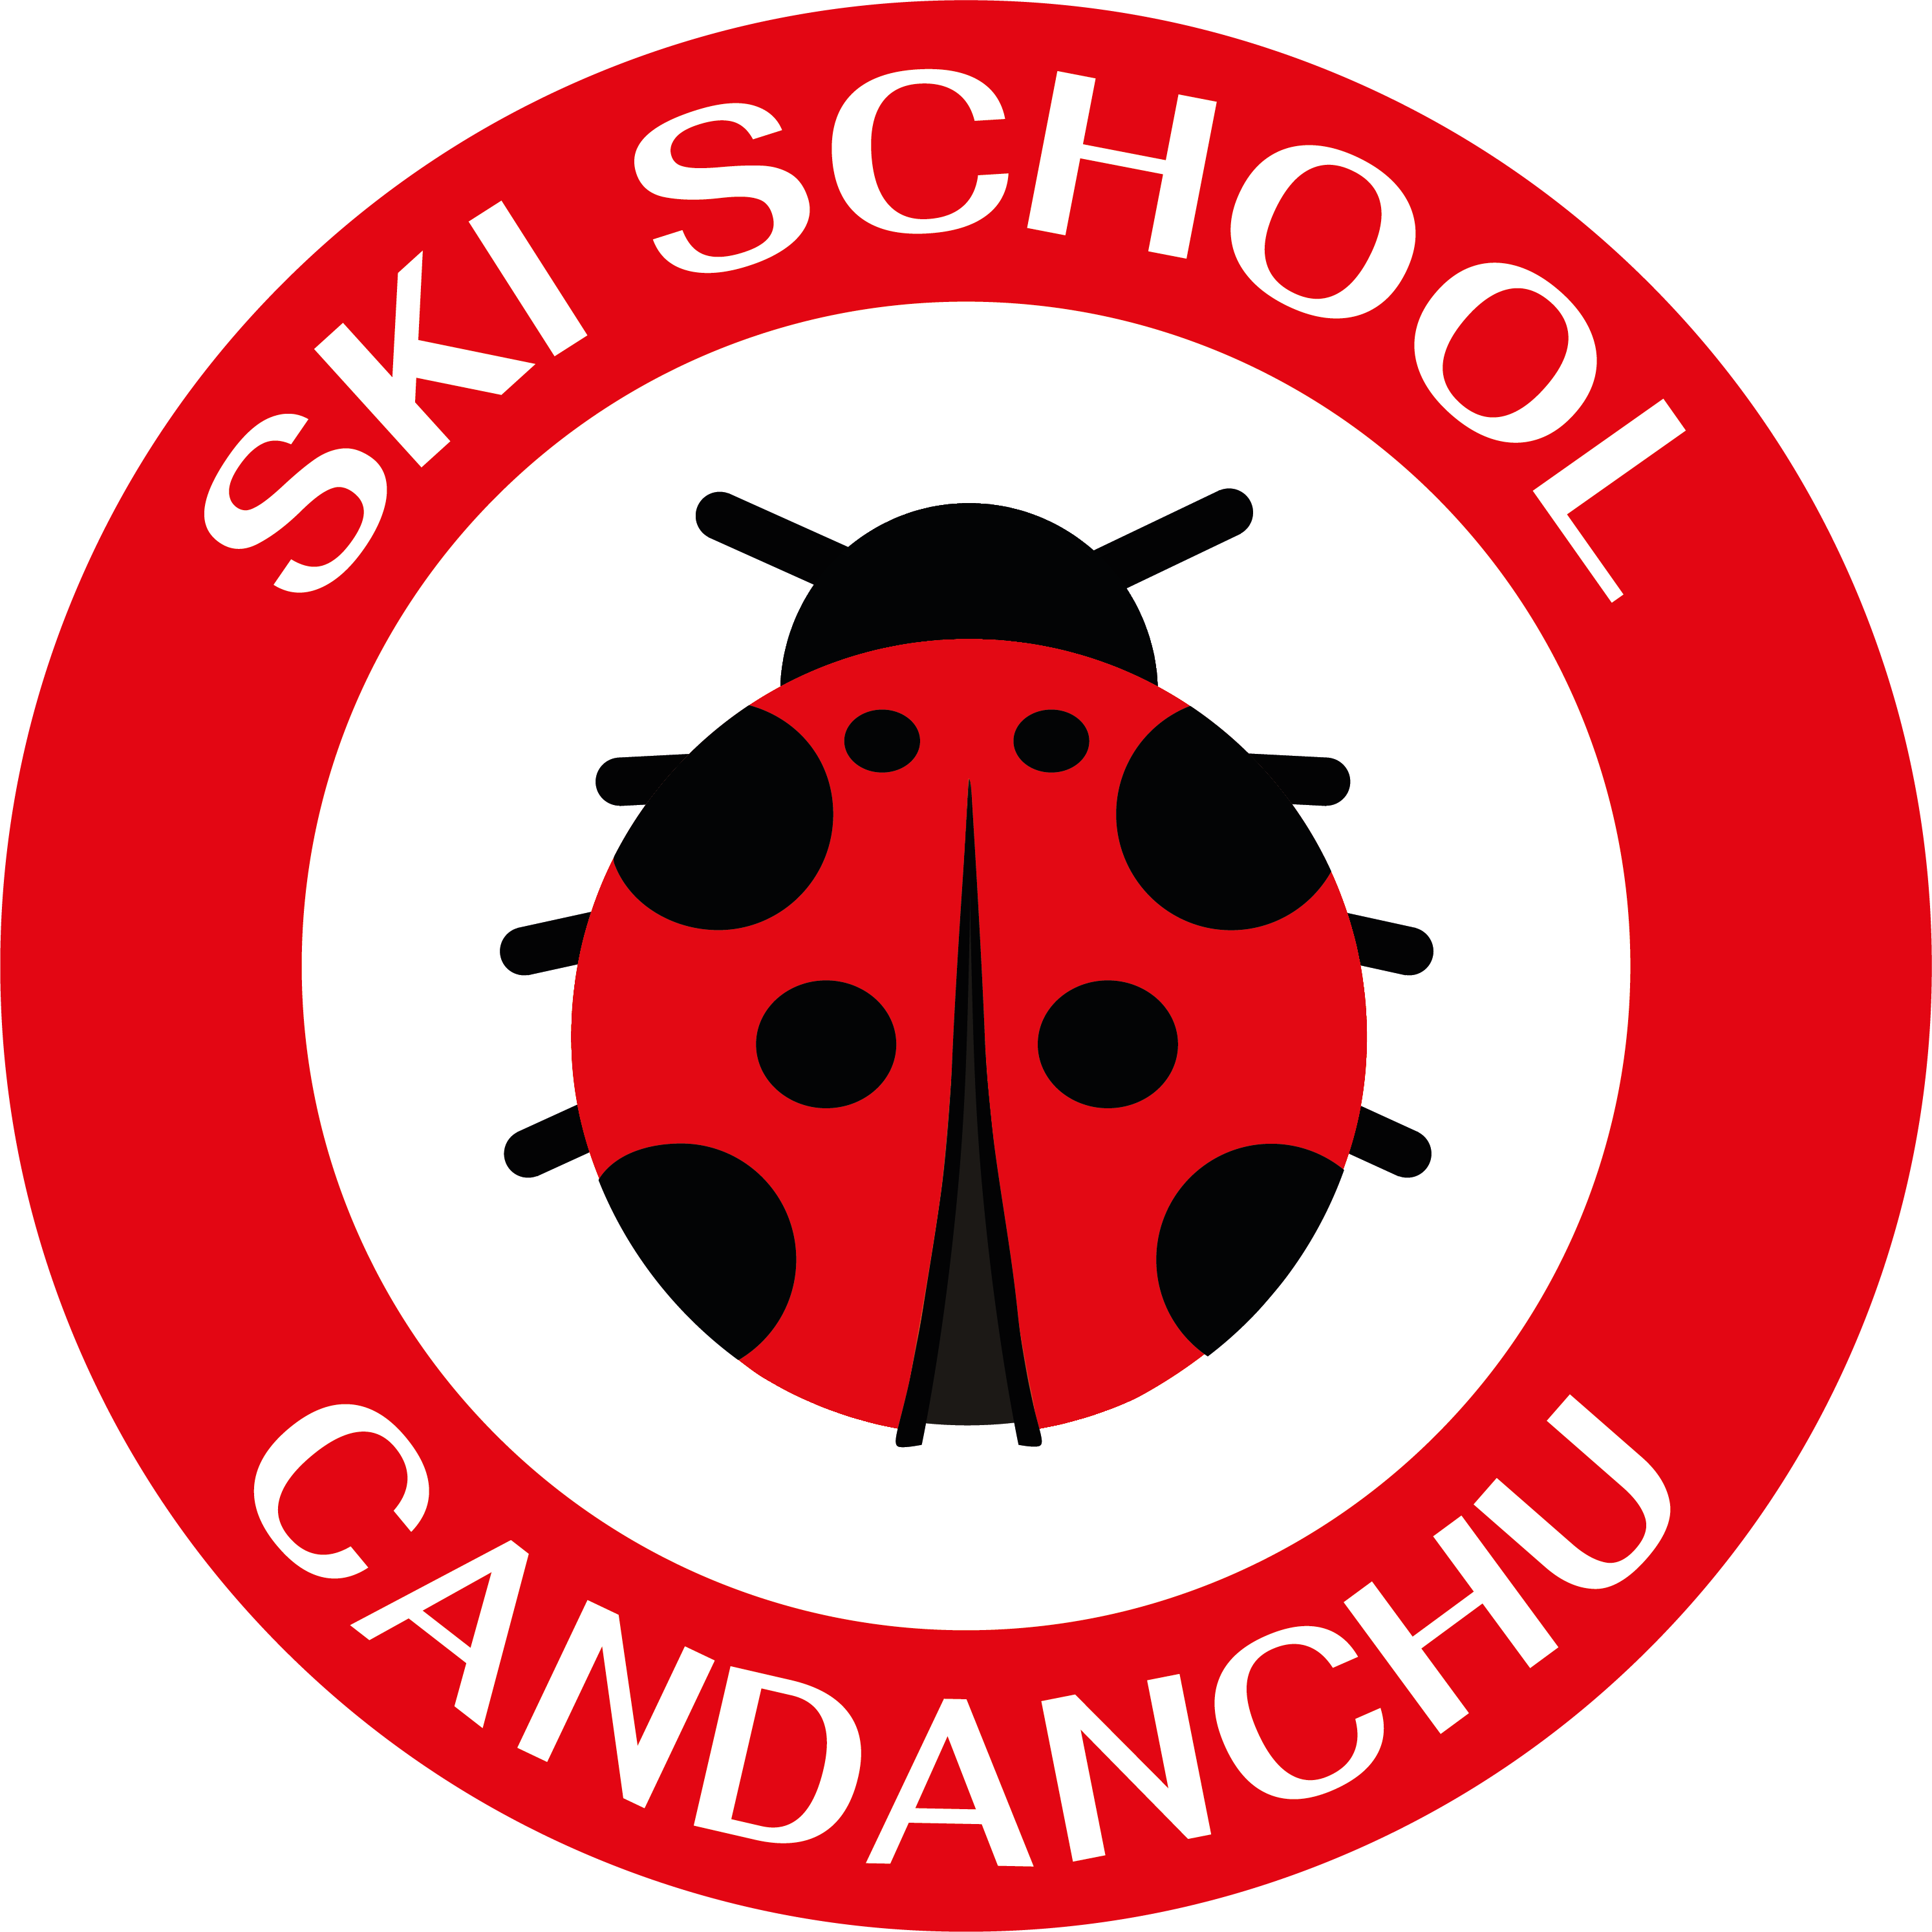 (c) Skischoolcandanchu.com